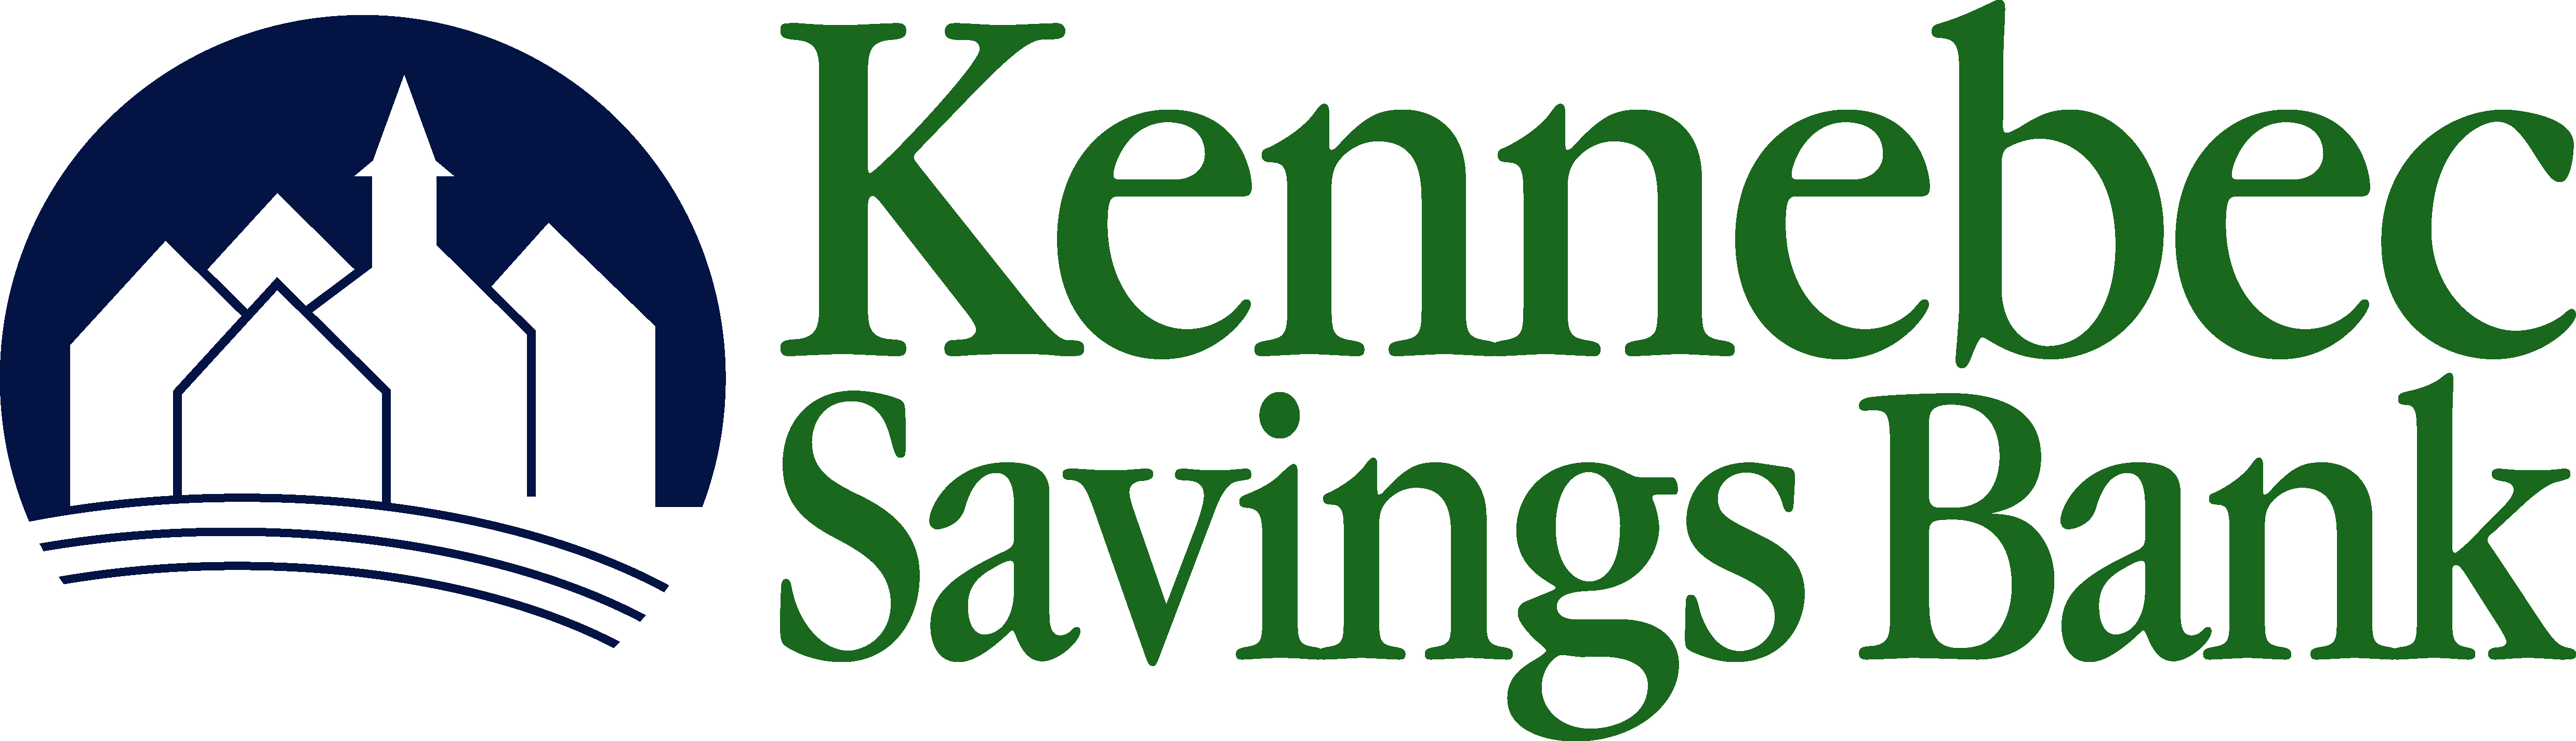 kennebec savings bank